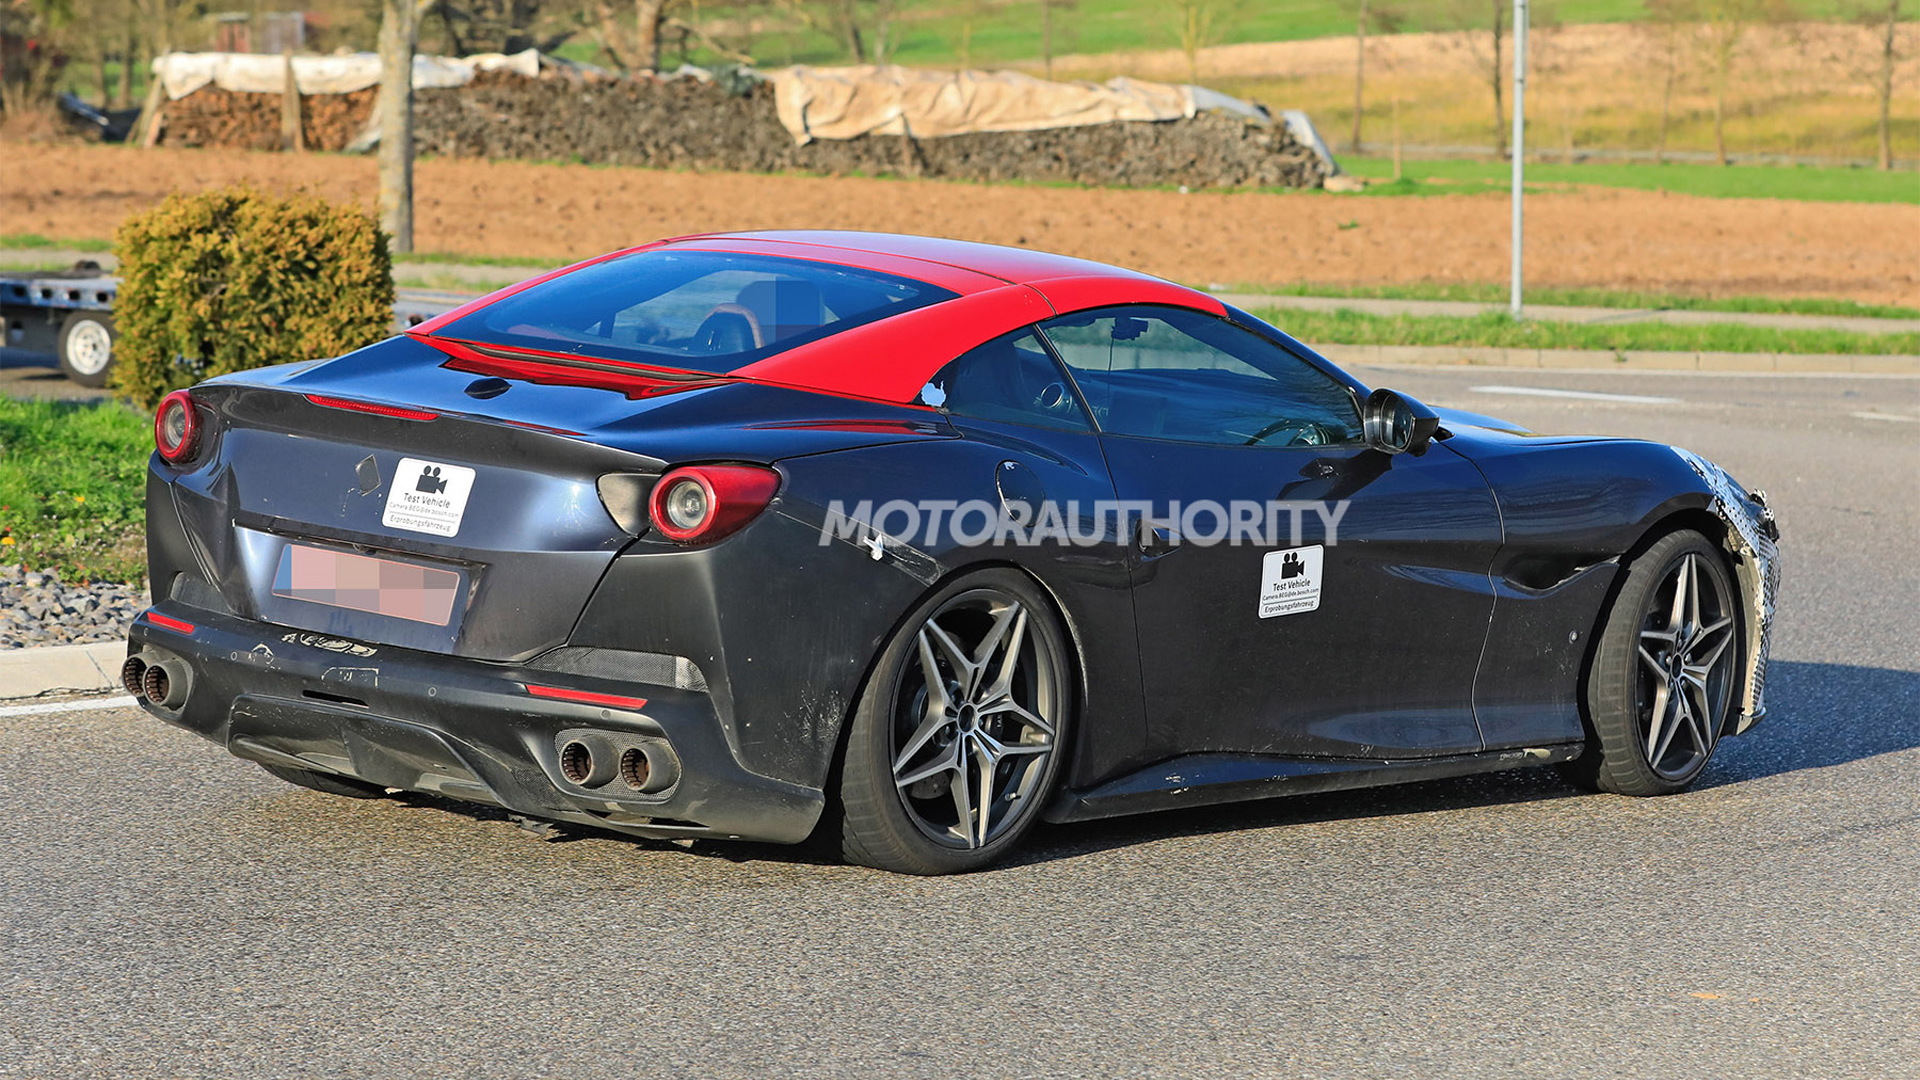 2021 Ferrari Portofino facelift spy shots - Photo credit: S. Baldauf/SB-Medien